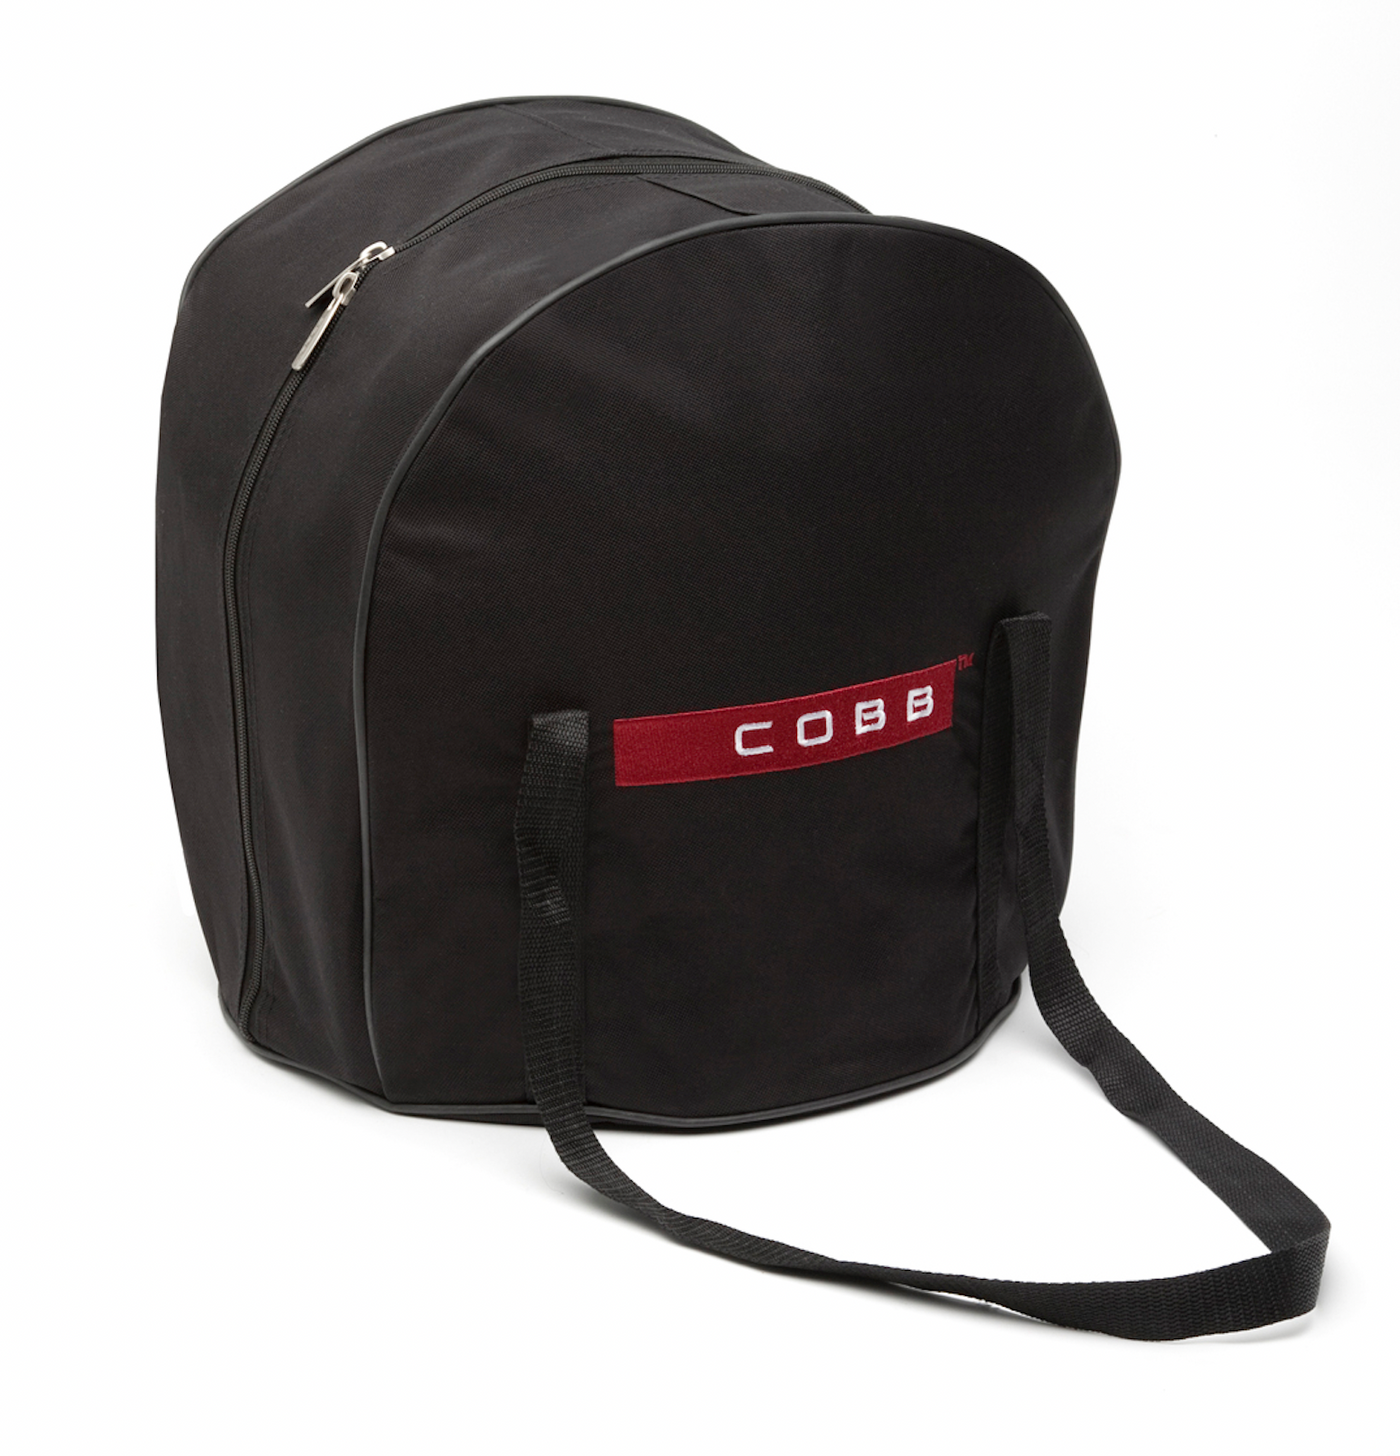 COBB Premier & Air Carry Bag